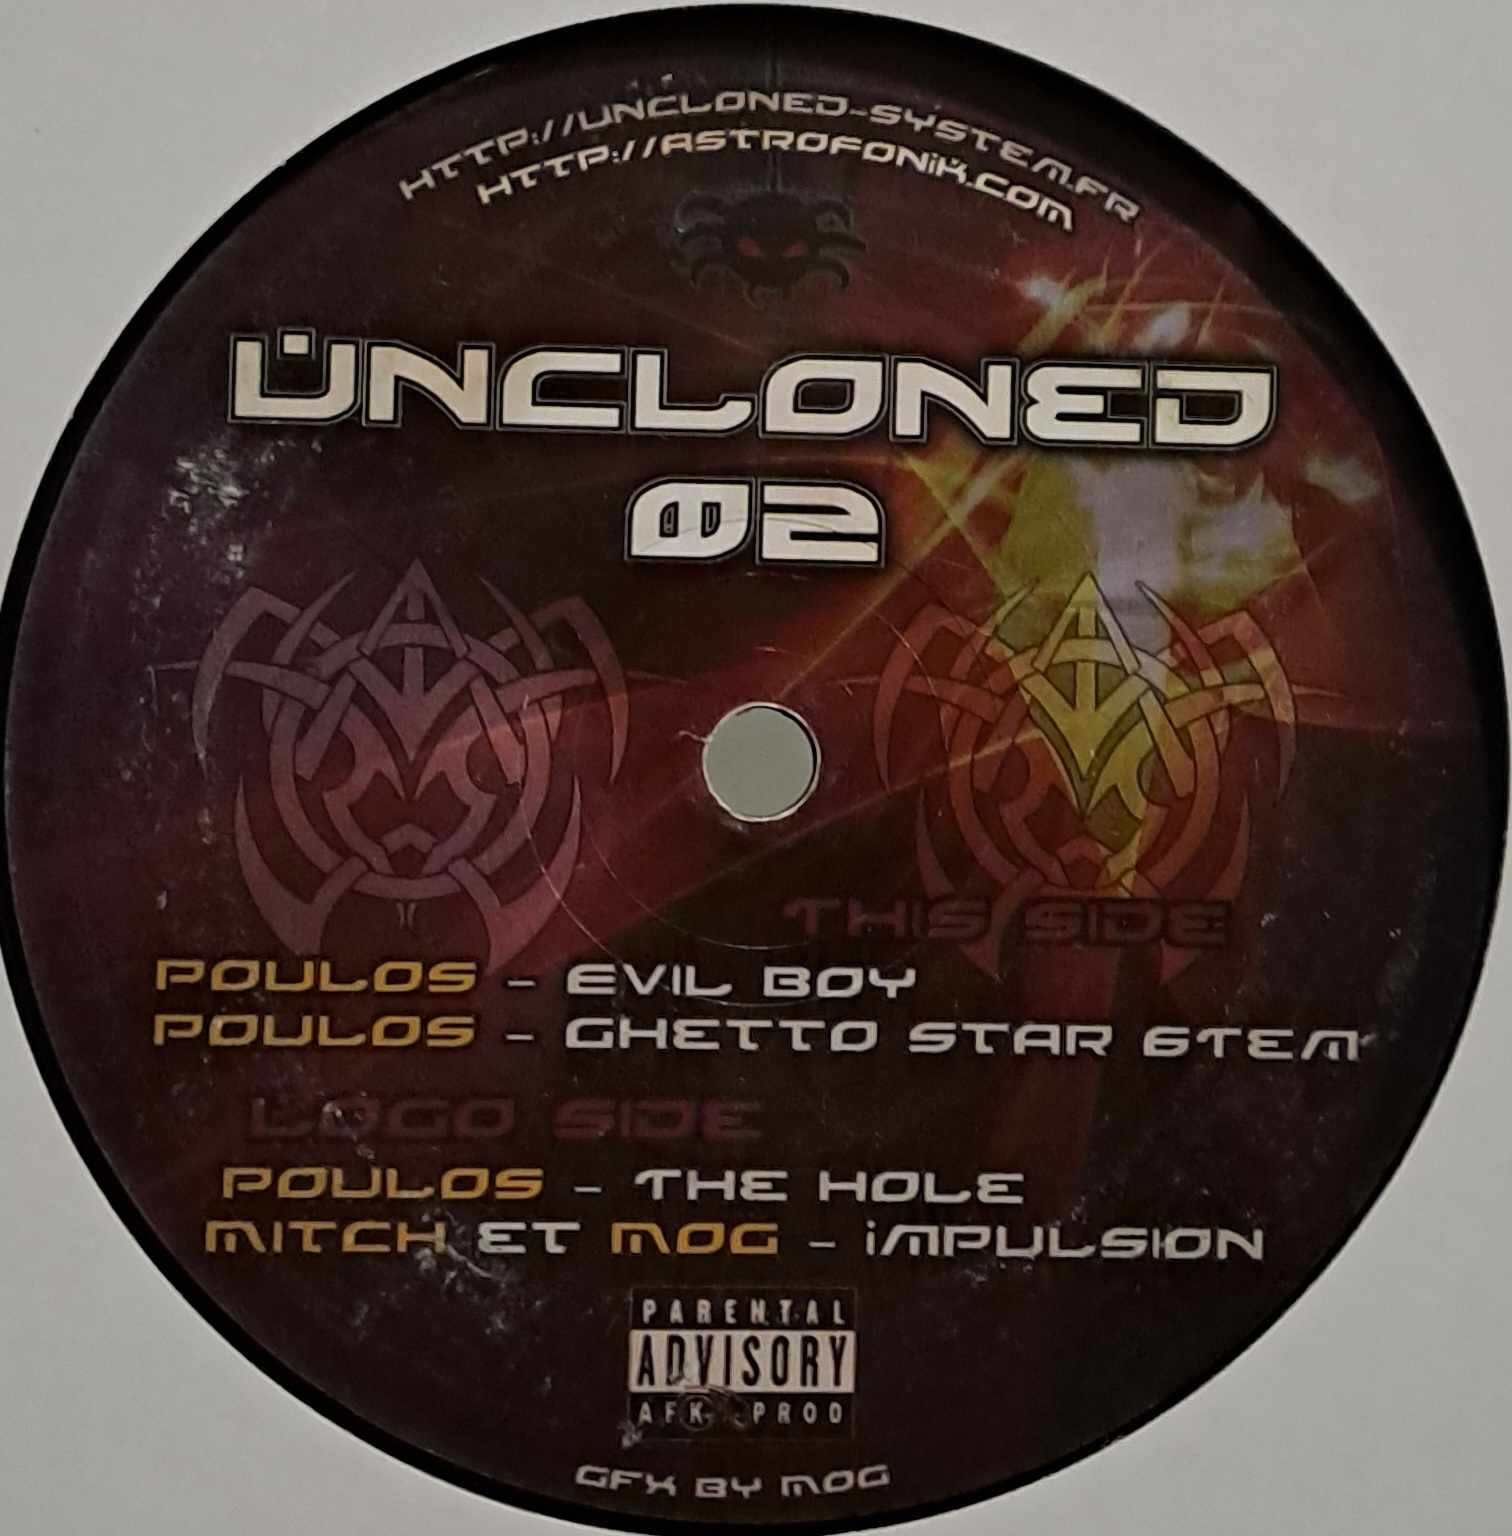 Uncloned 02 - vinyle freetekno